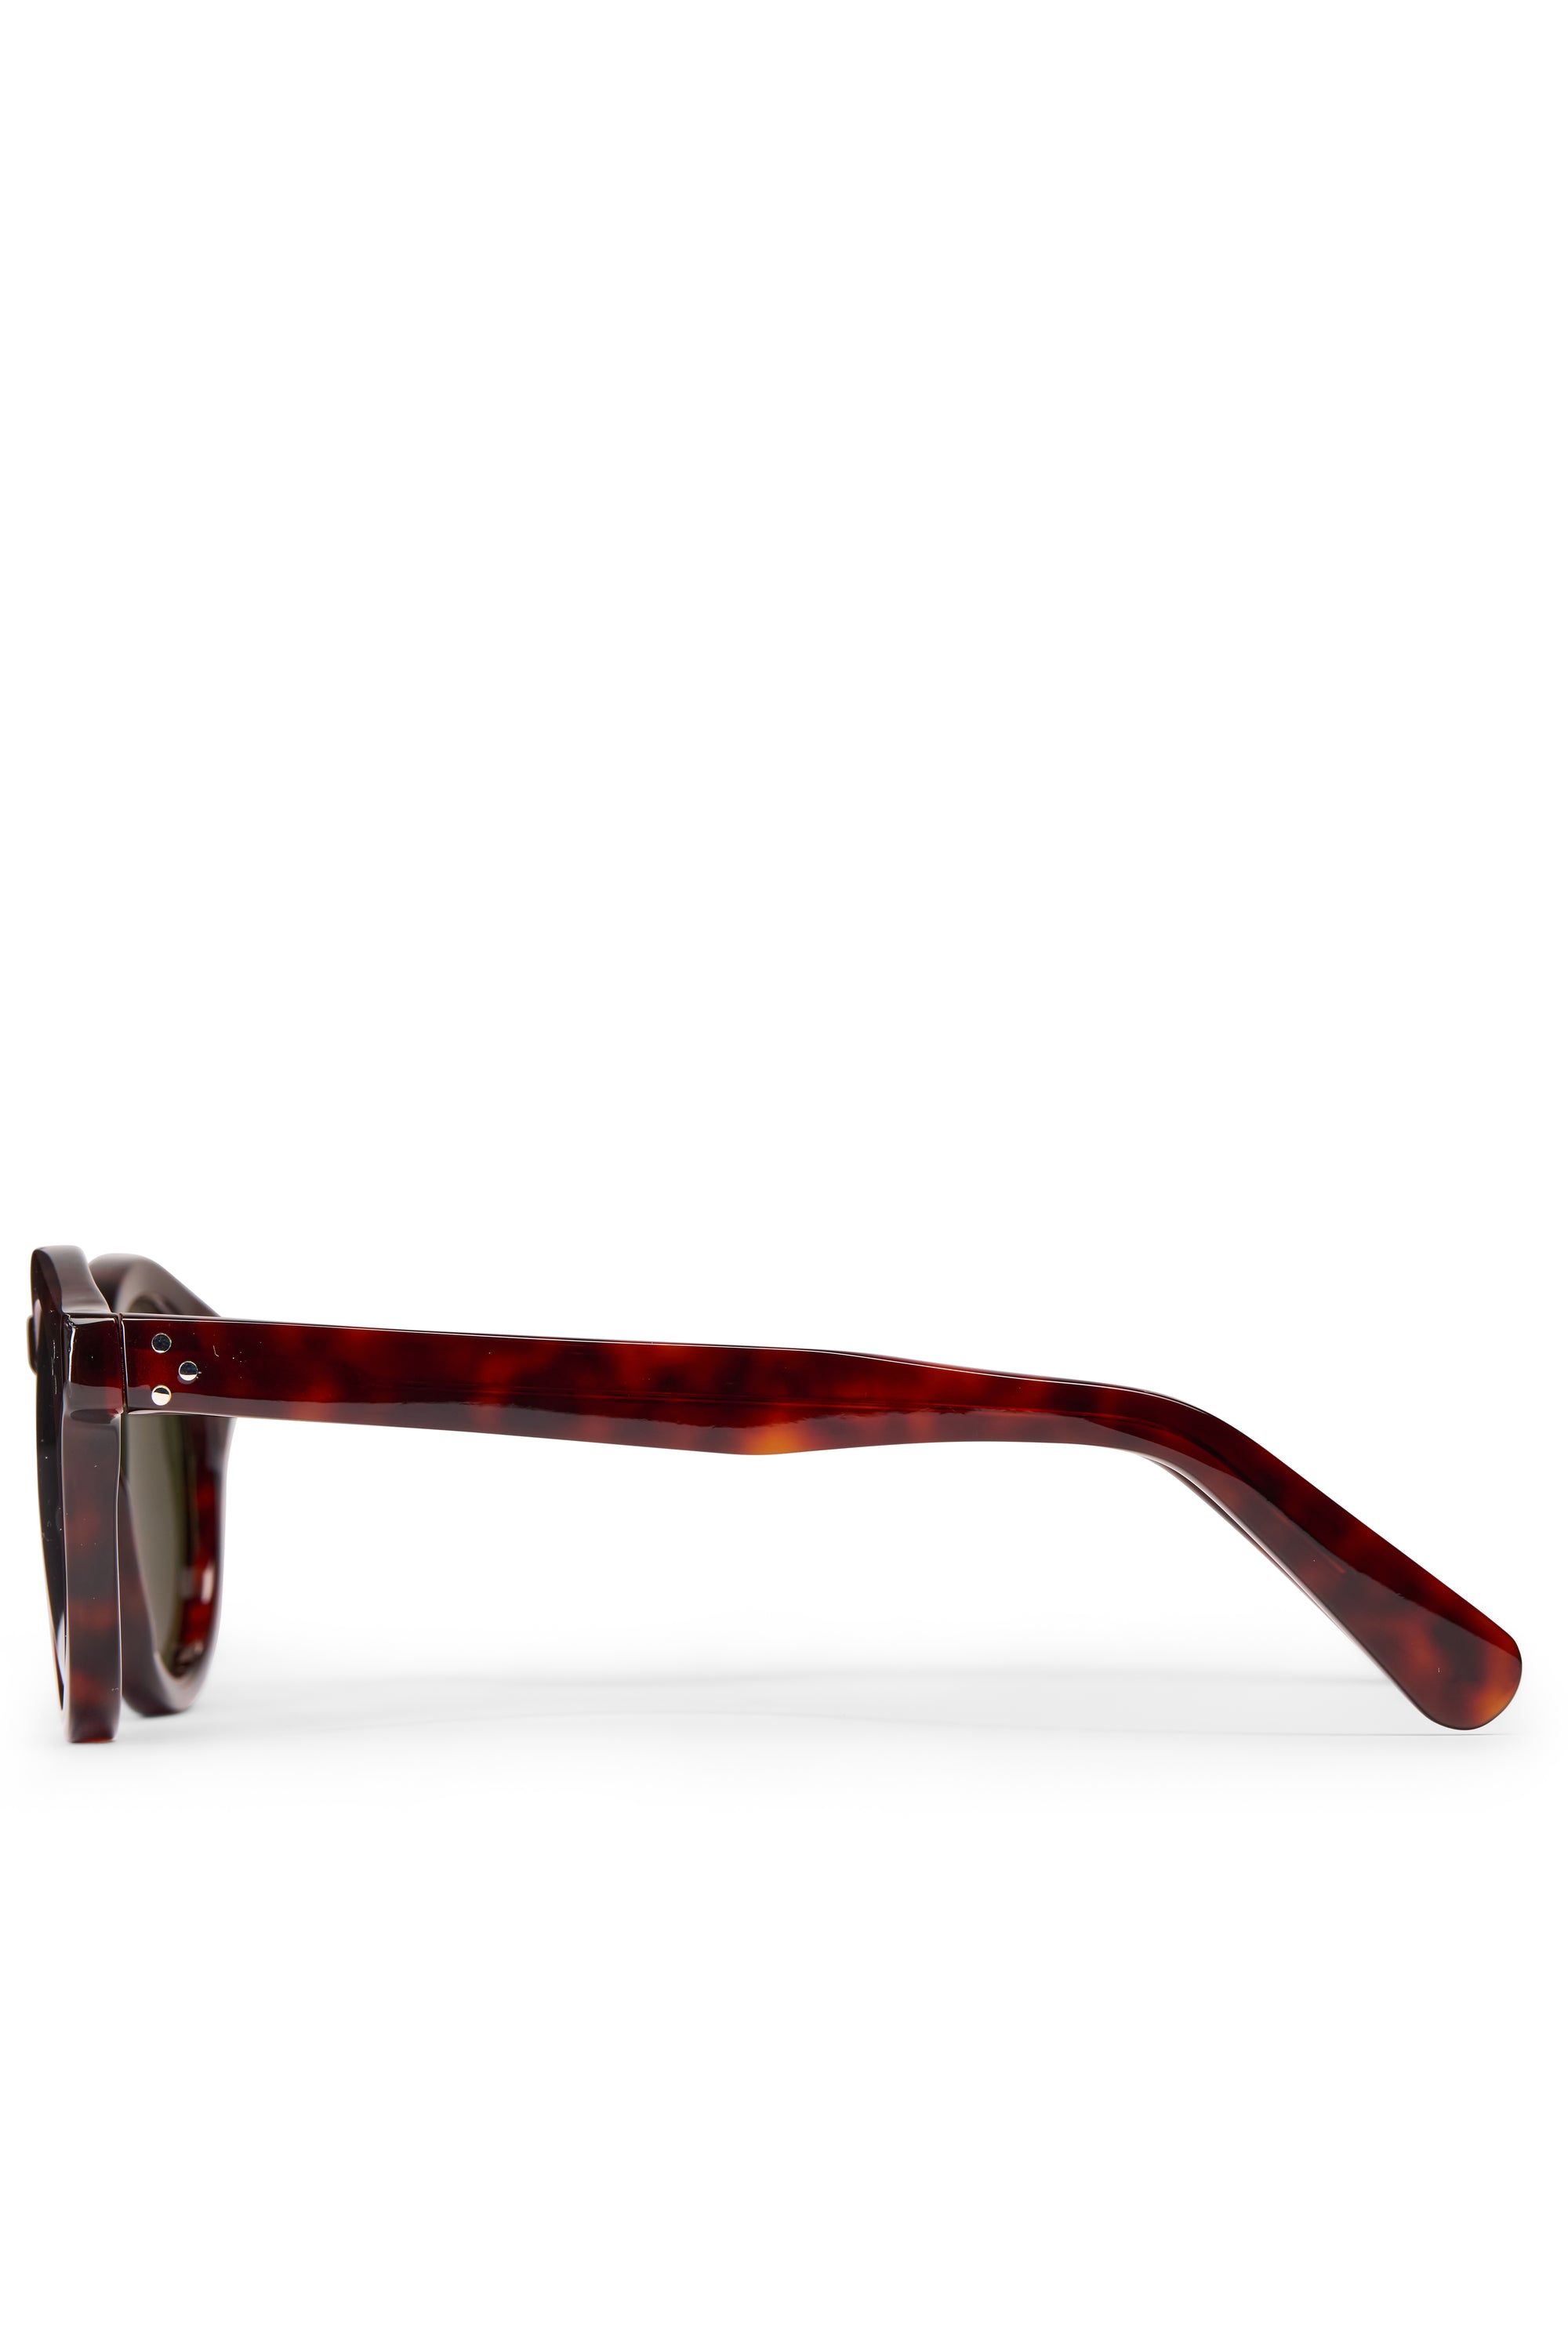 The Grosvenor Sunglasses